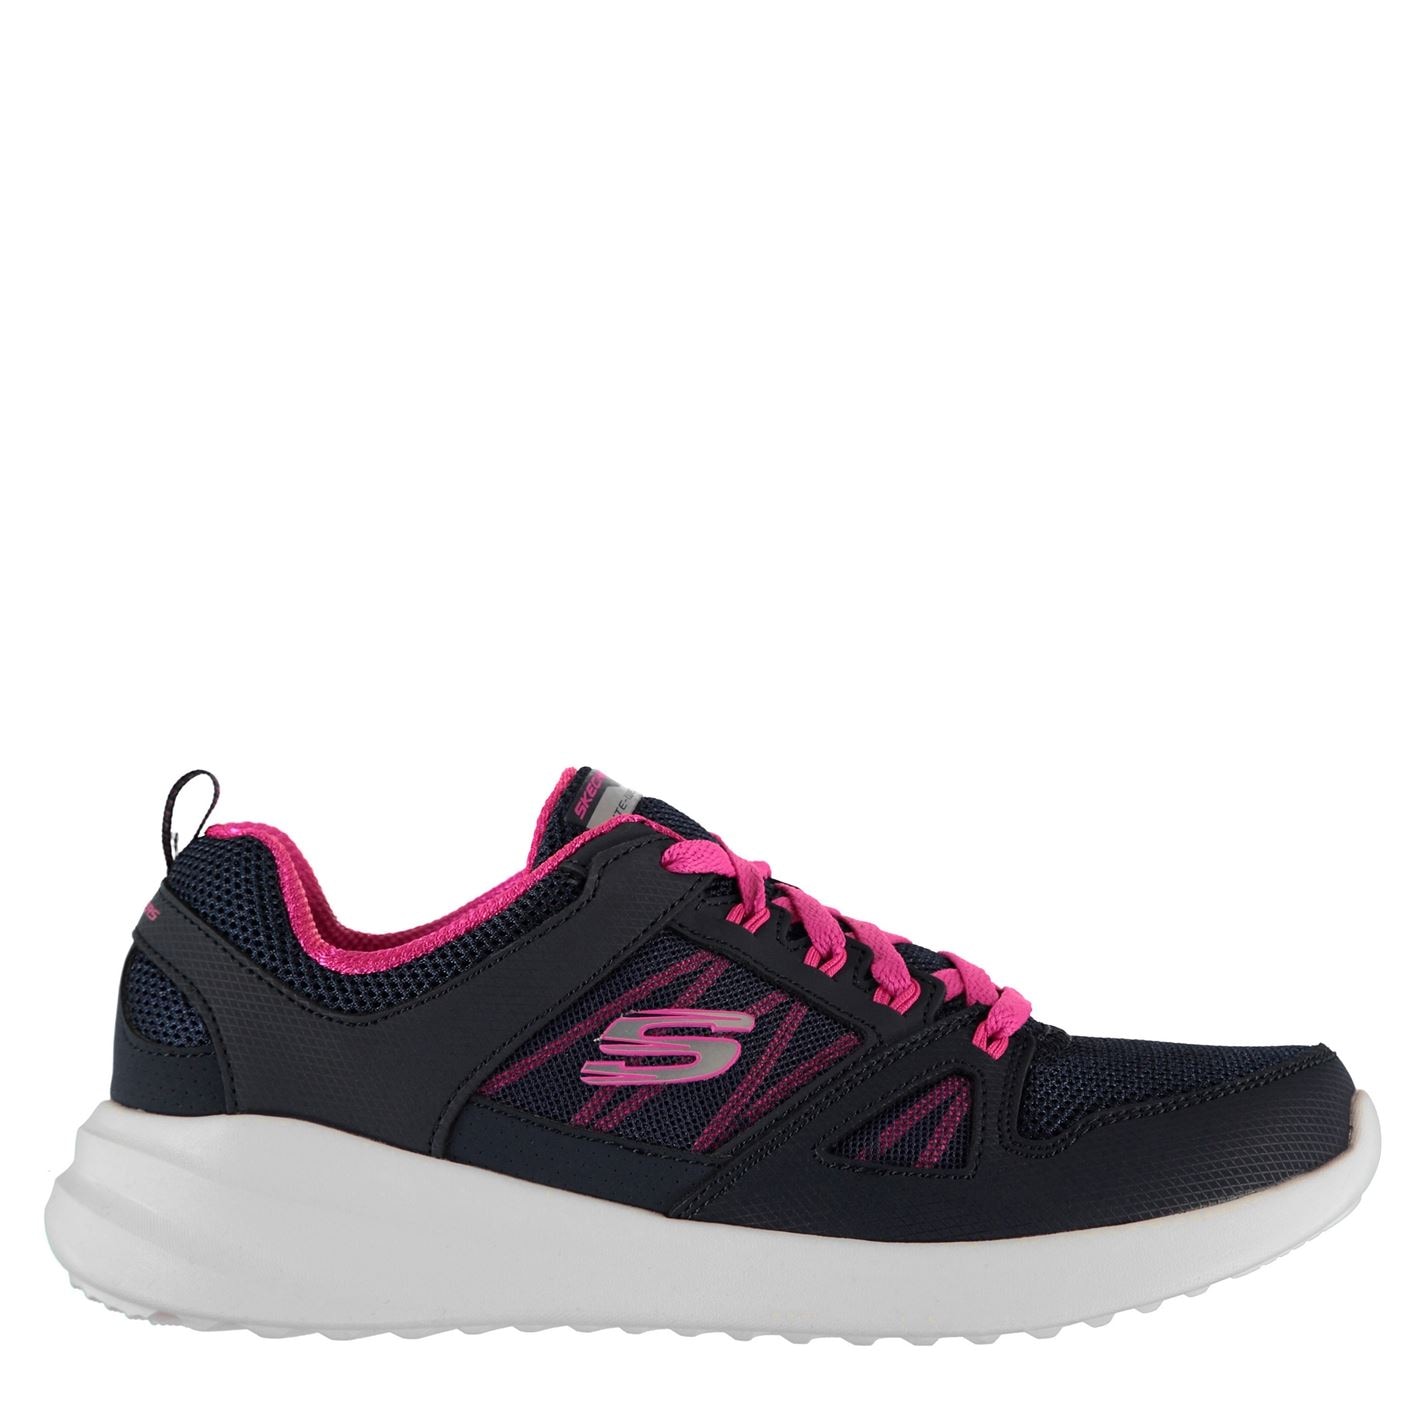 Adidasi sport Skechers Skybound pentru Femei negru roz